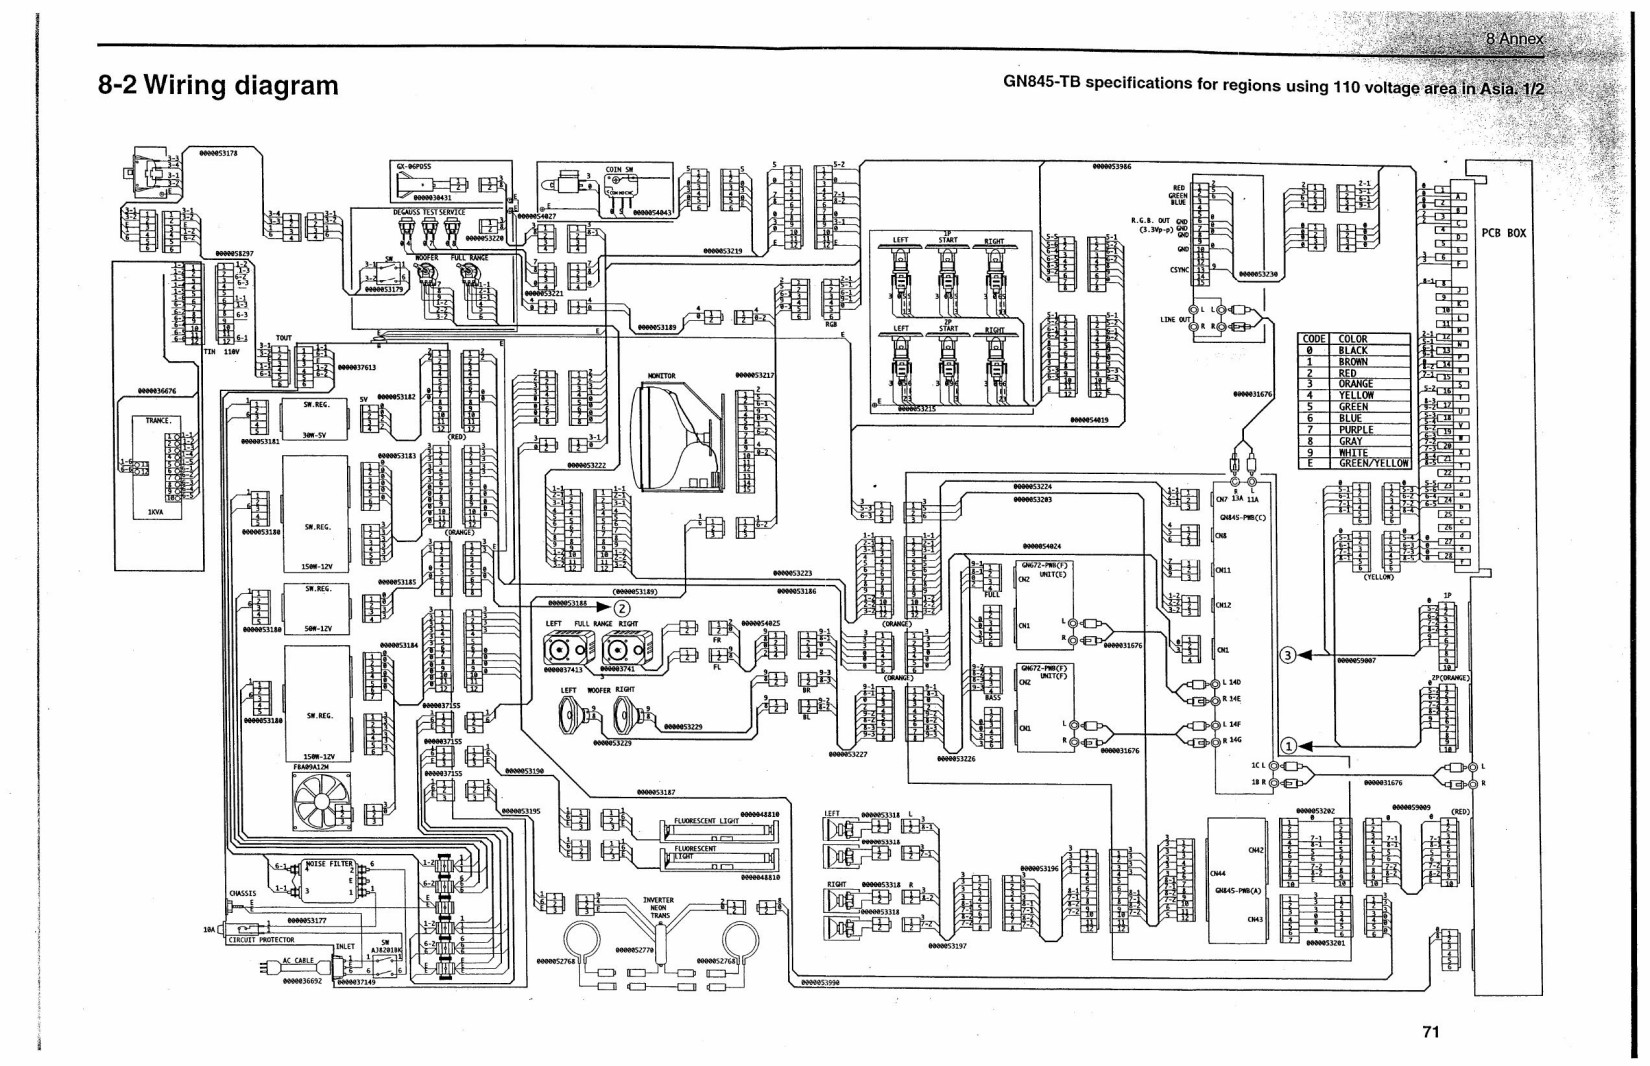 DDR Wiring Diagrams